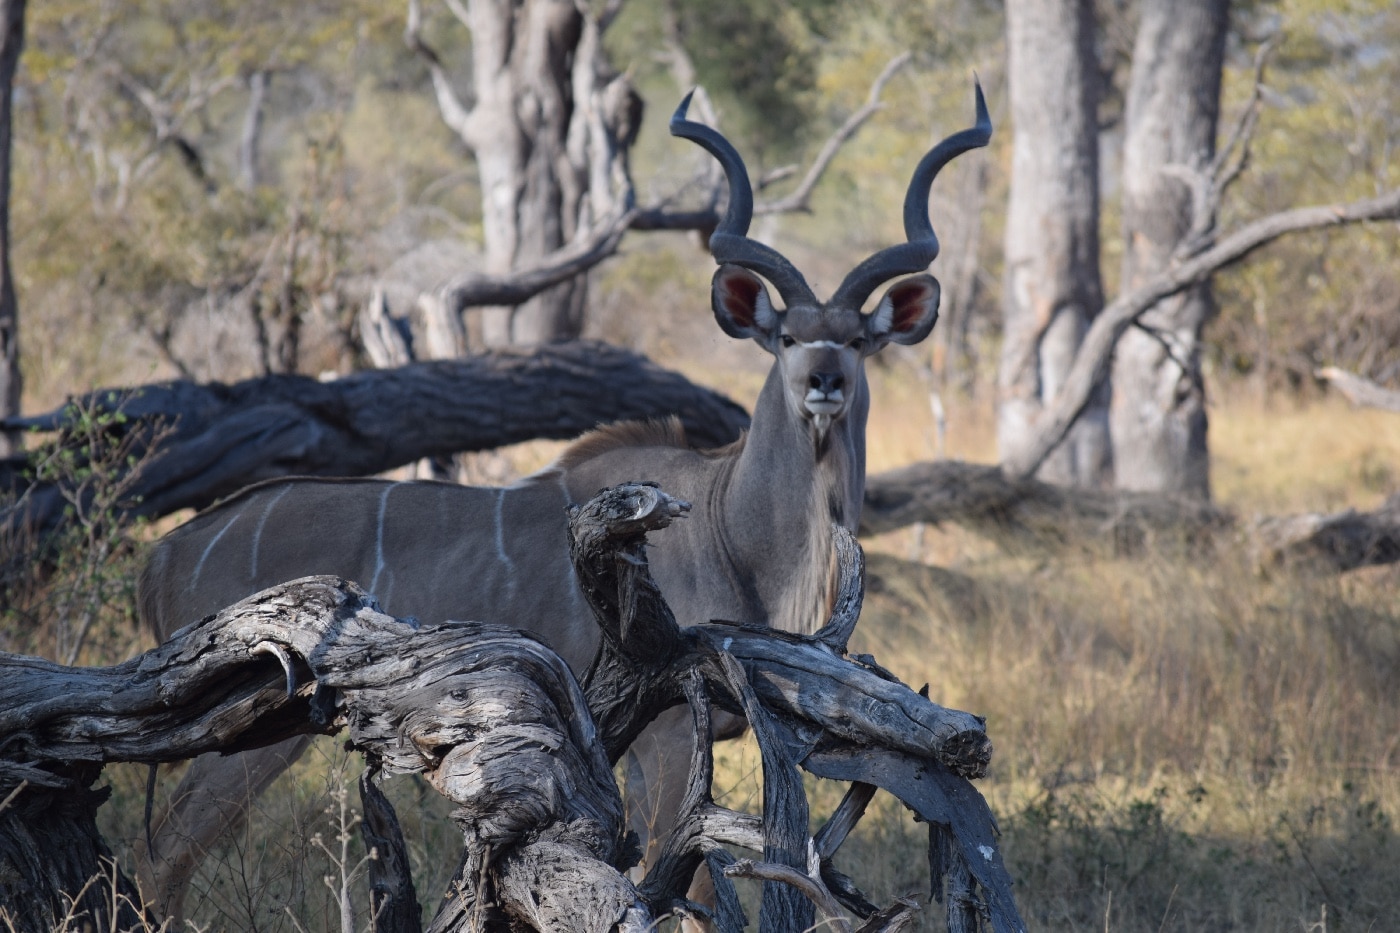 hunting kudu with high bc projectiles at long range hunt